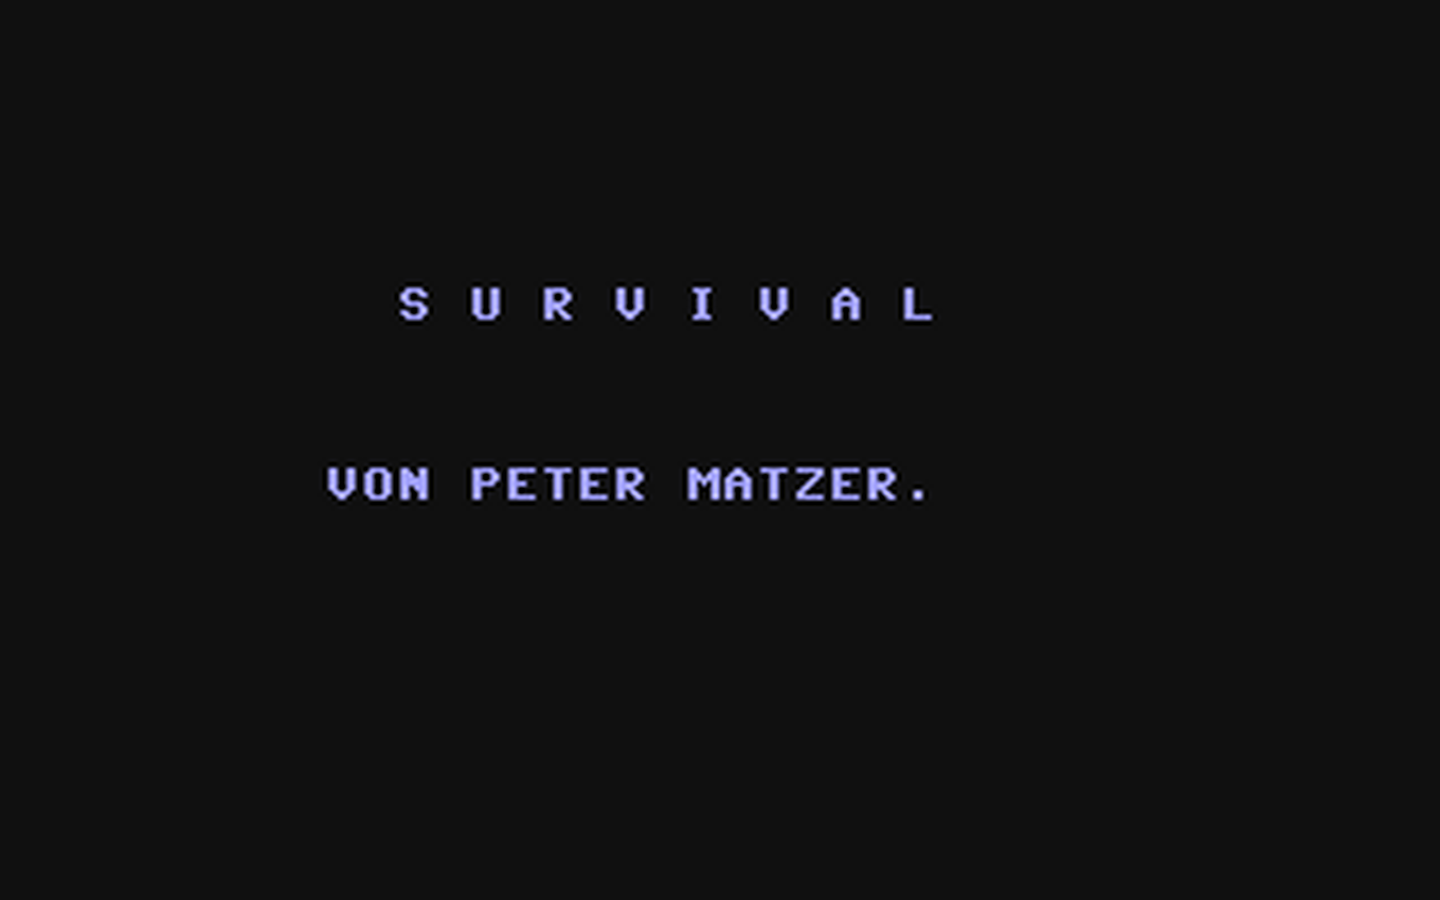 C64 GameBase Survival